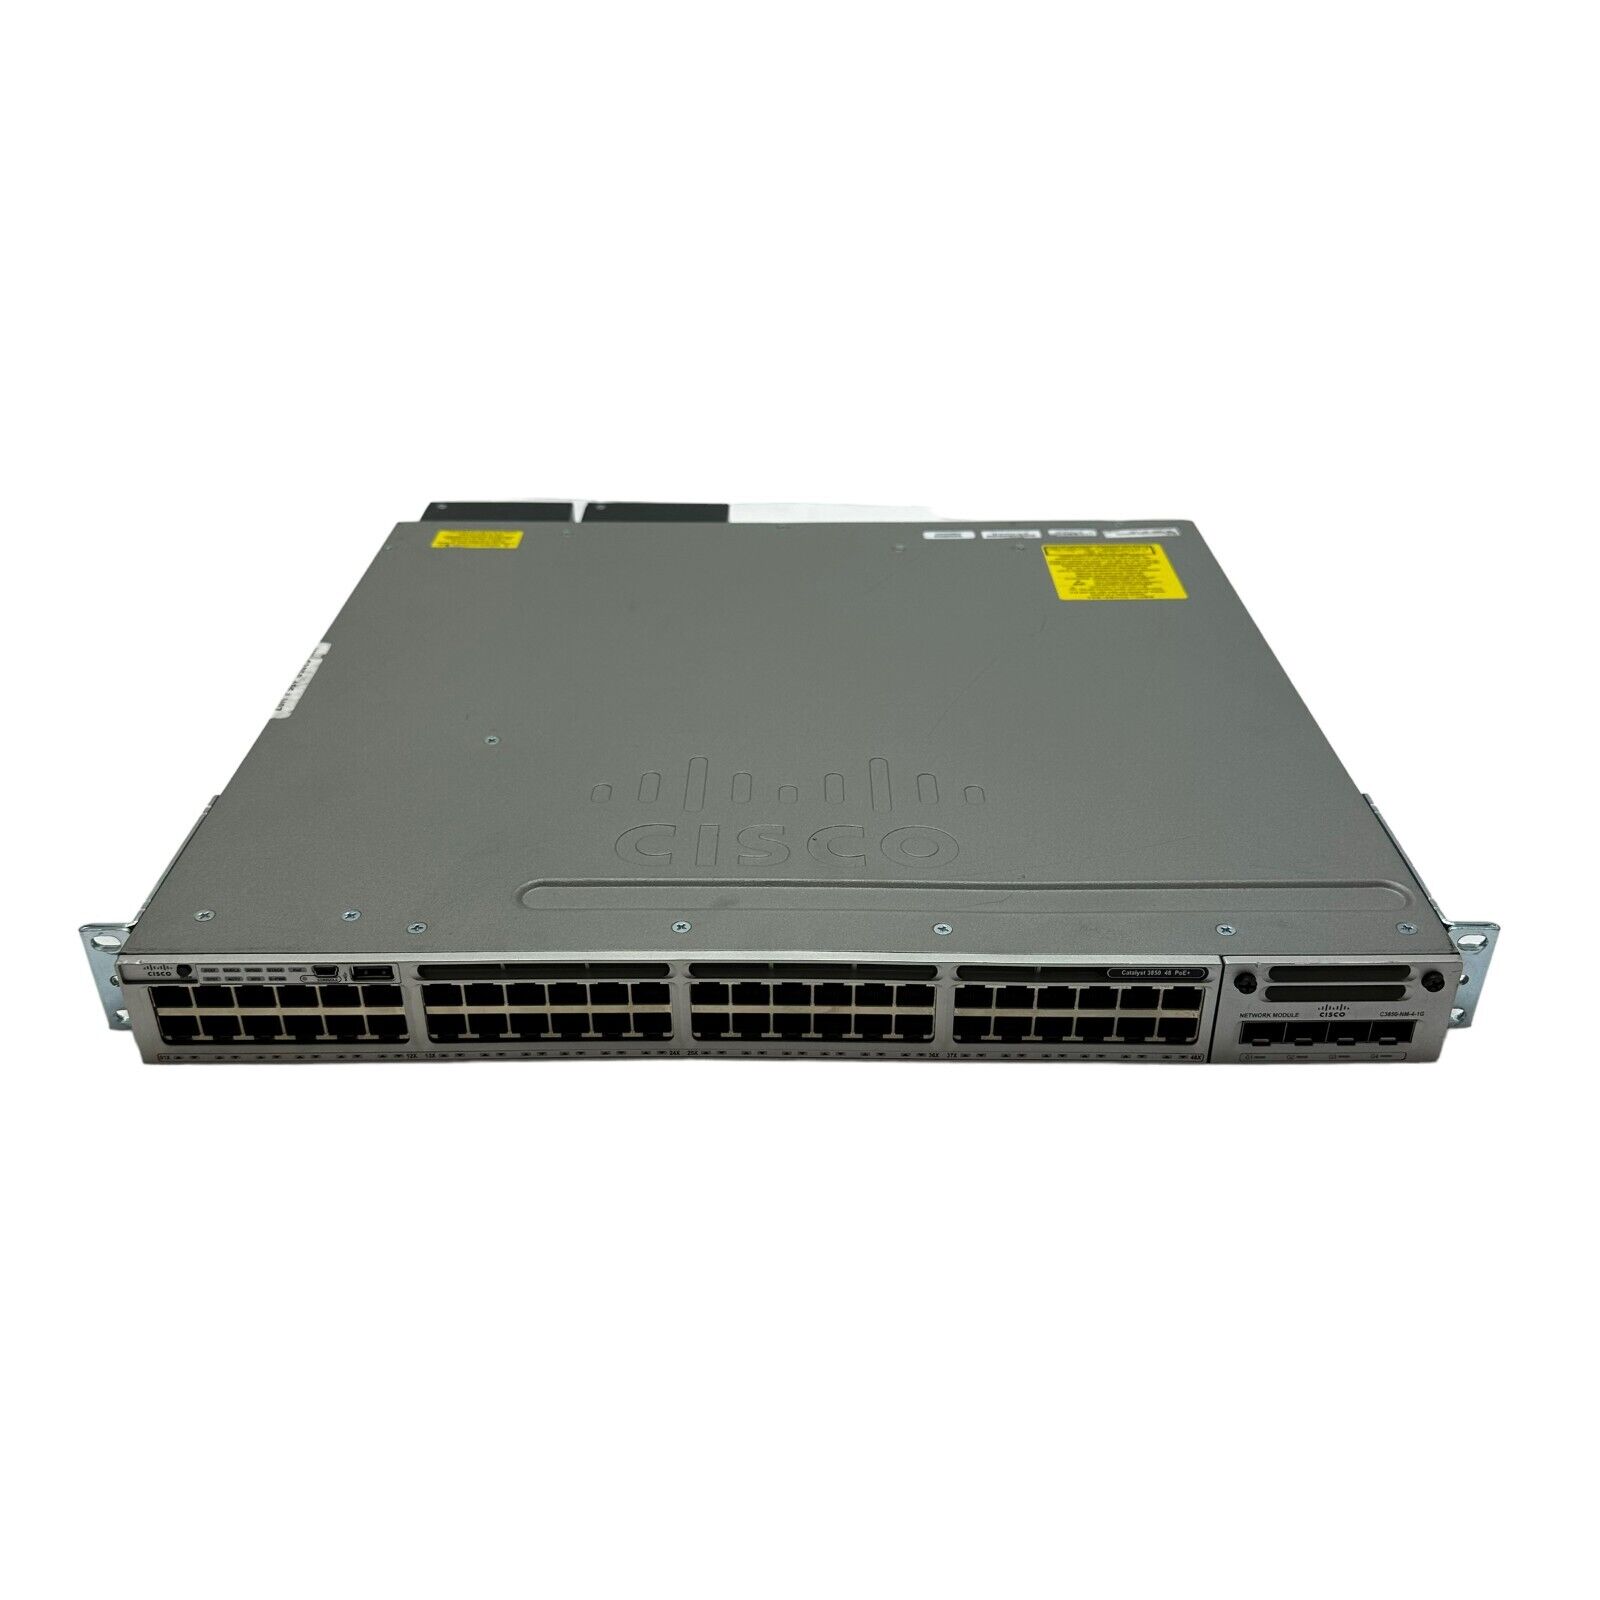 Cisco Catalyst 3850 48 PoE+ WS-C3850-48F-L Switch Dual 1100WAC PSU w/ 1G Module